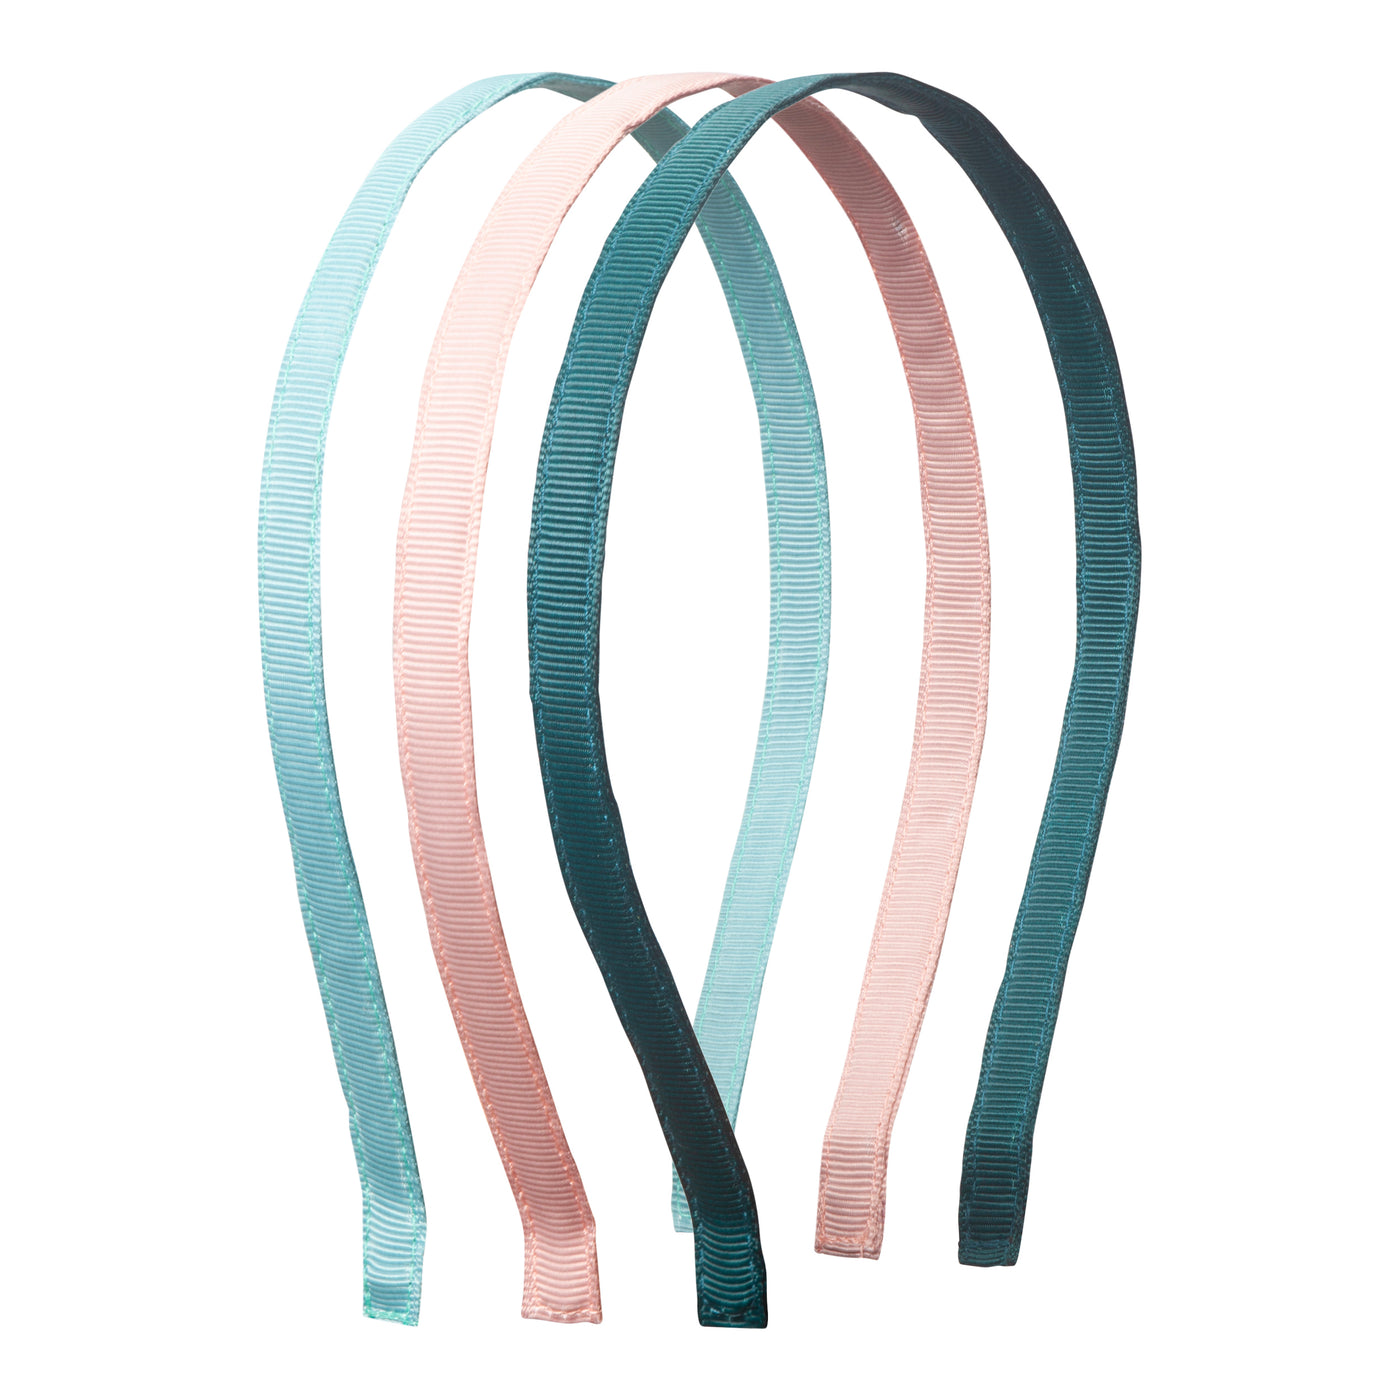 Grosgrain ribbon alice band pack